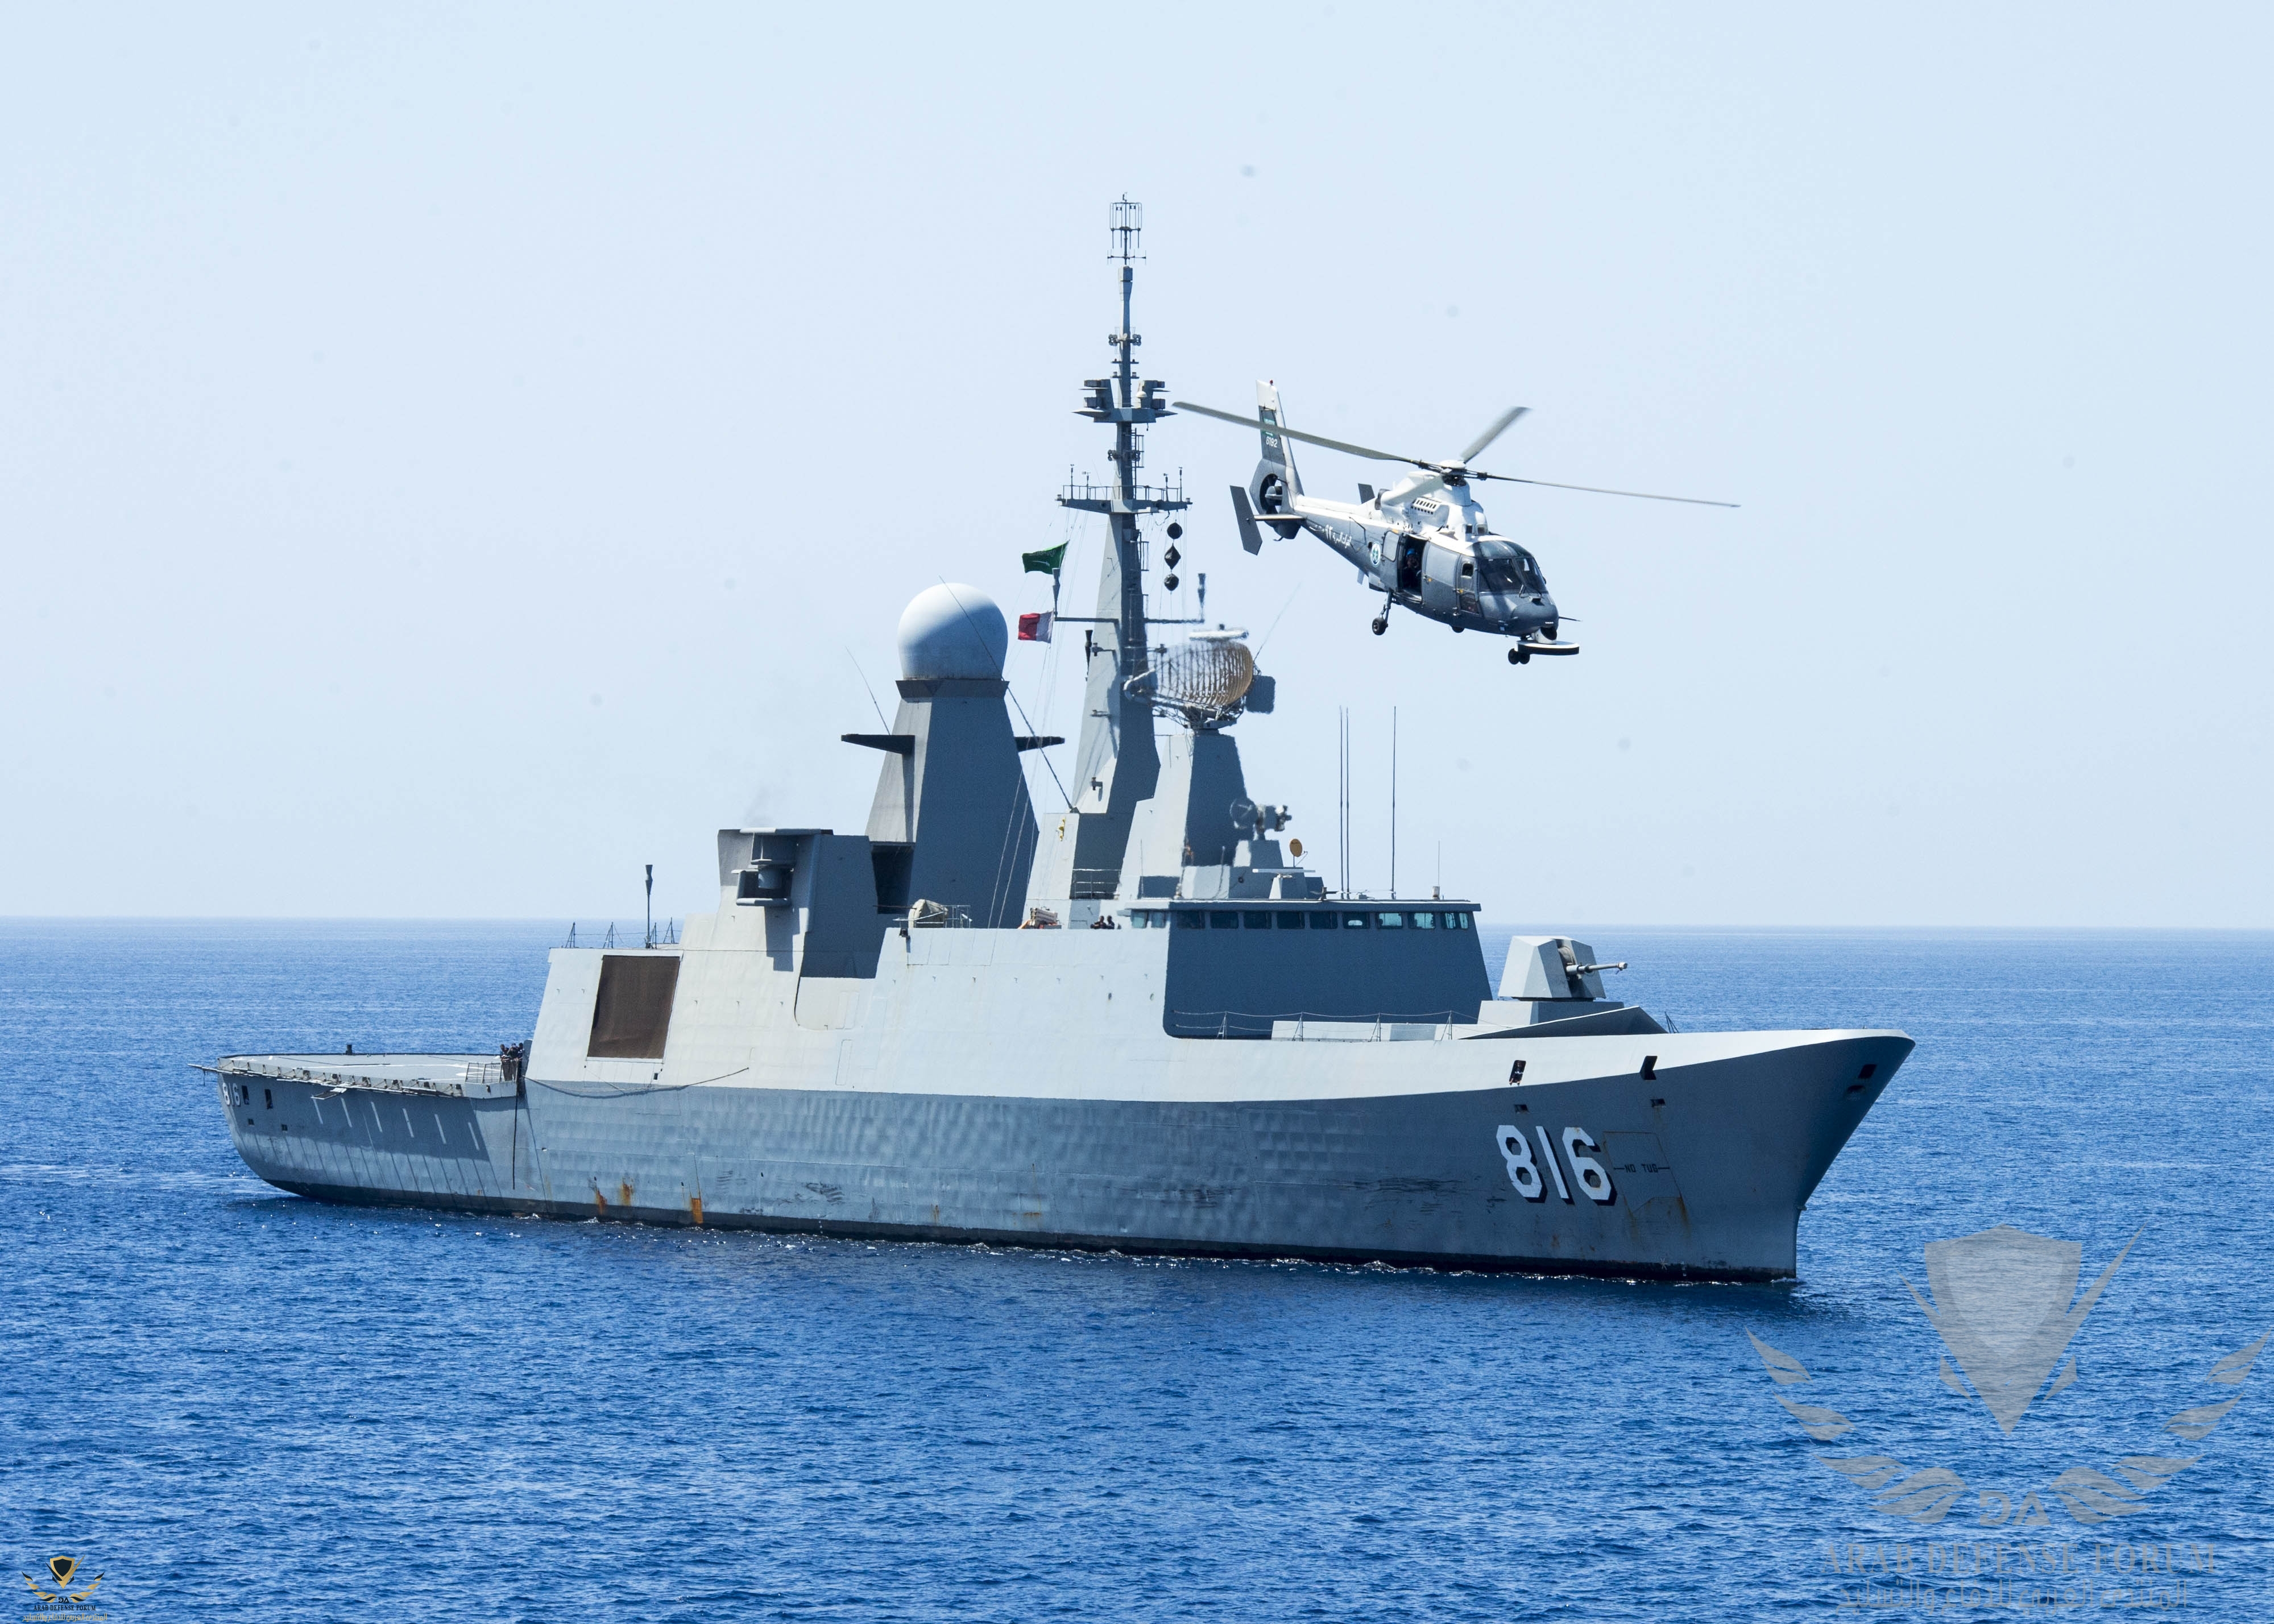 Royal_Saudi_Navy_frigate_Al_Dammam_(816)_in_May_2014.jpg